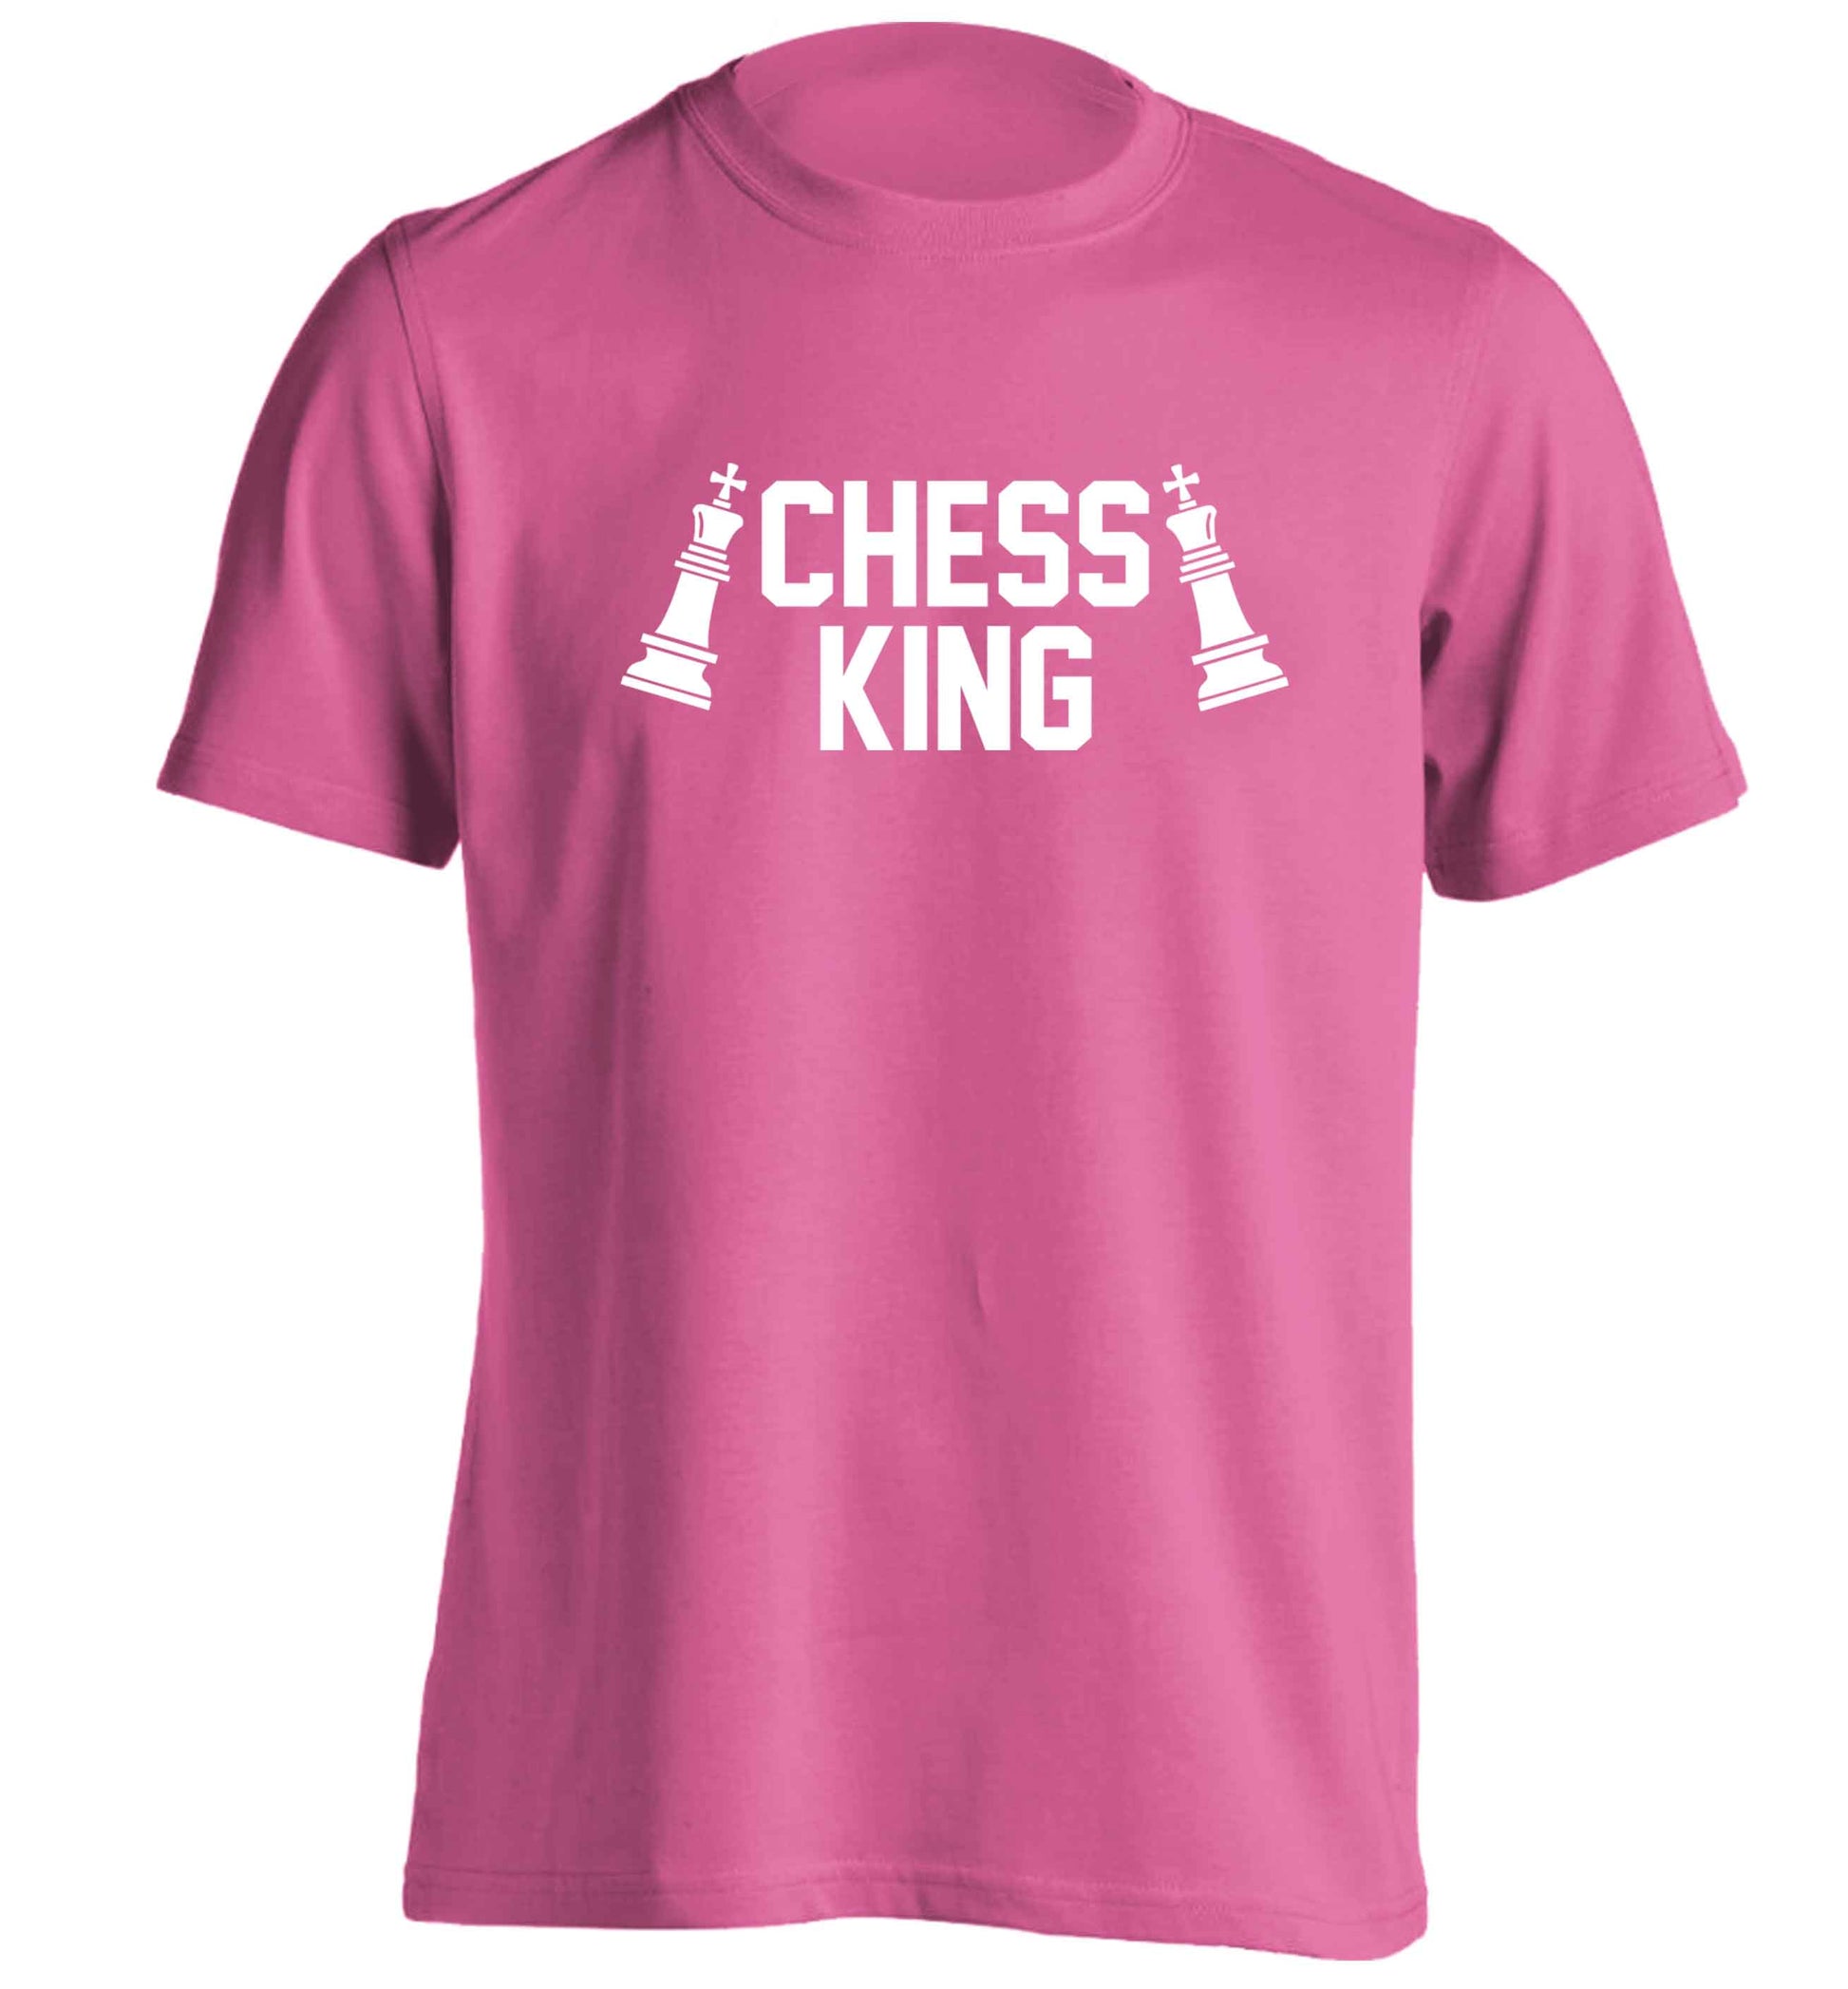 Chess king adults unisex pink Tshirt 2XL